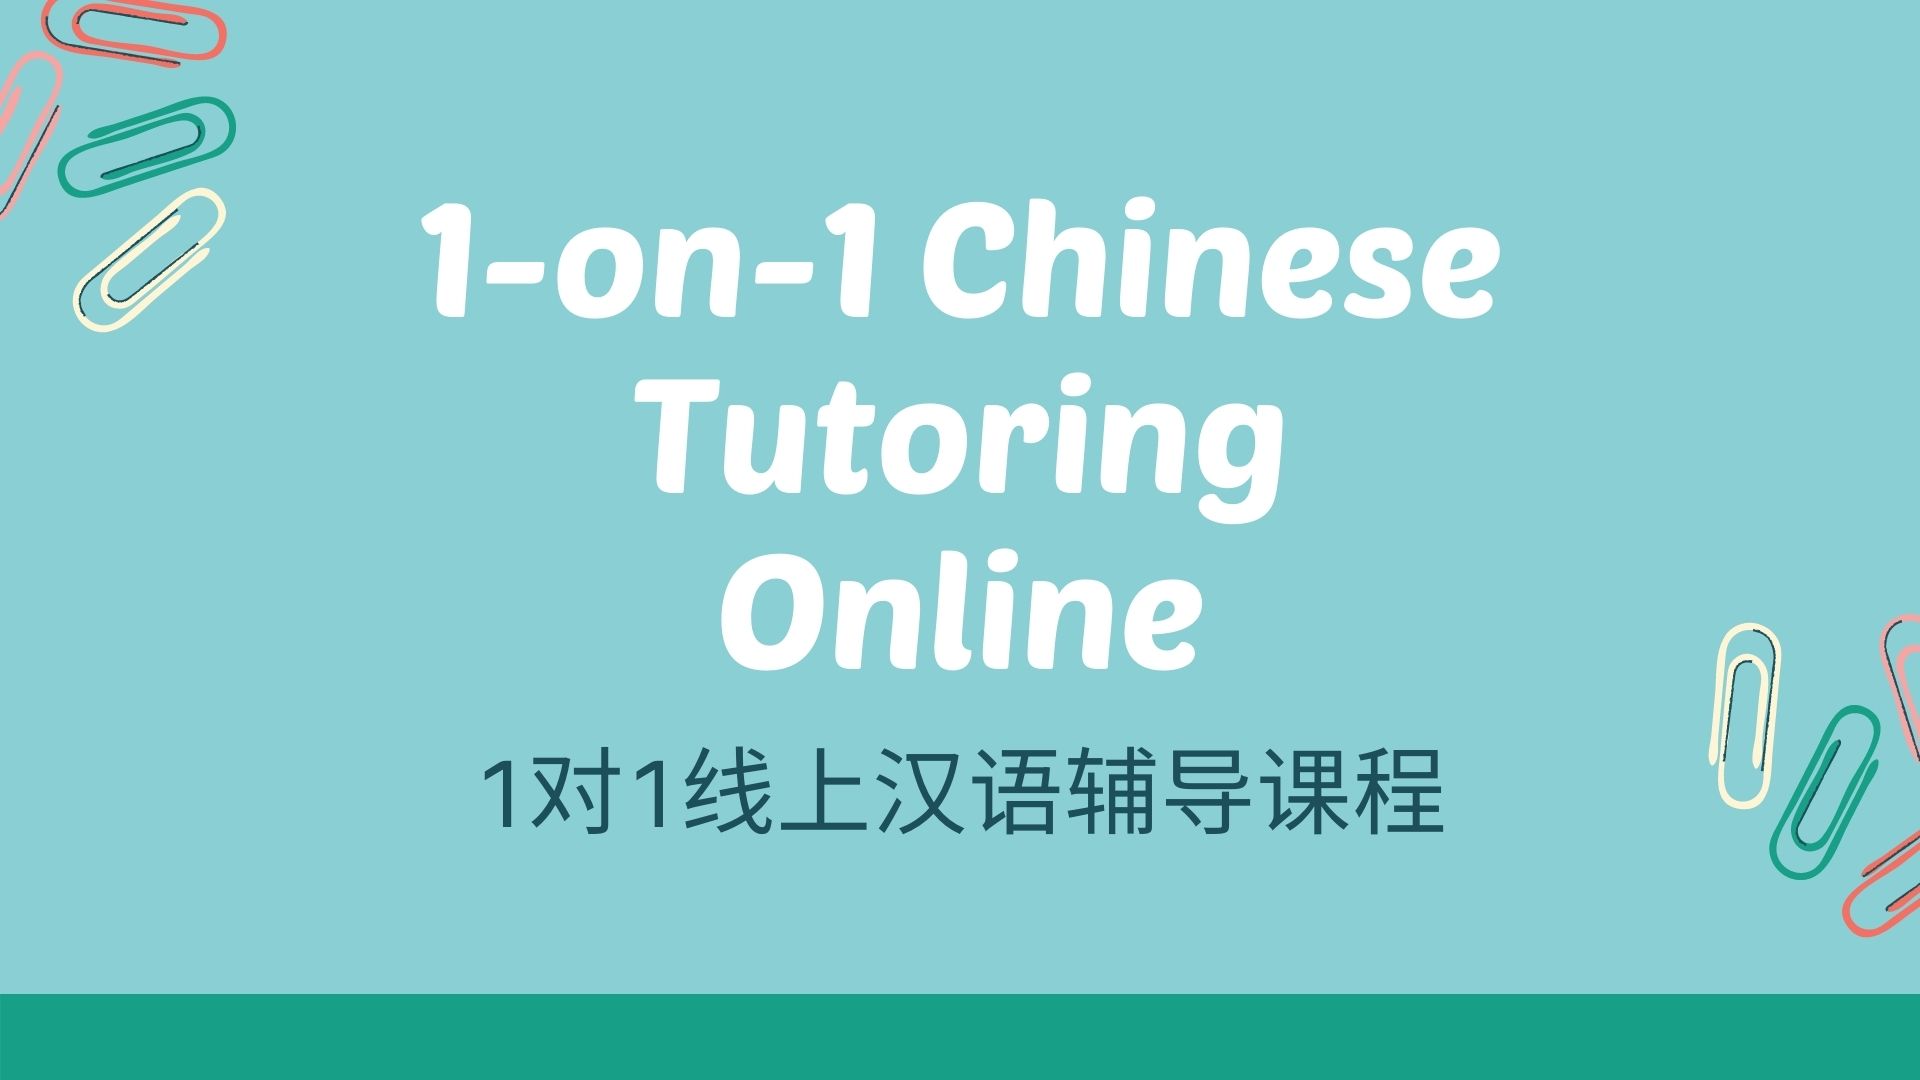 Chinese tutoring online